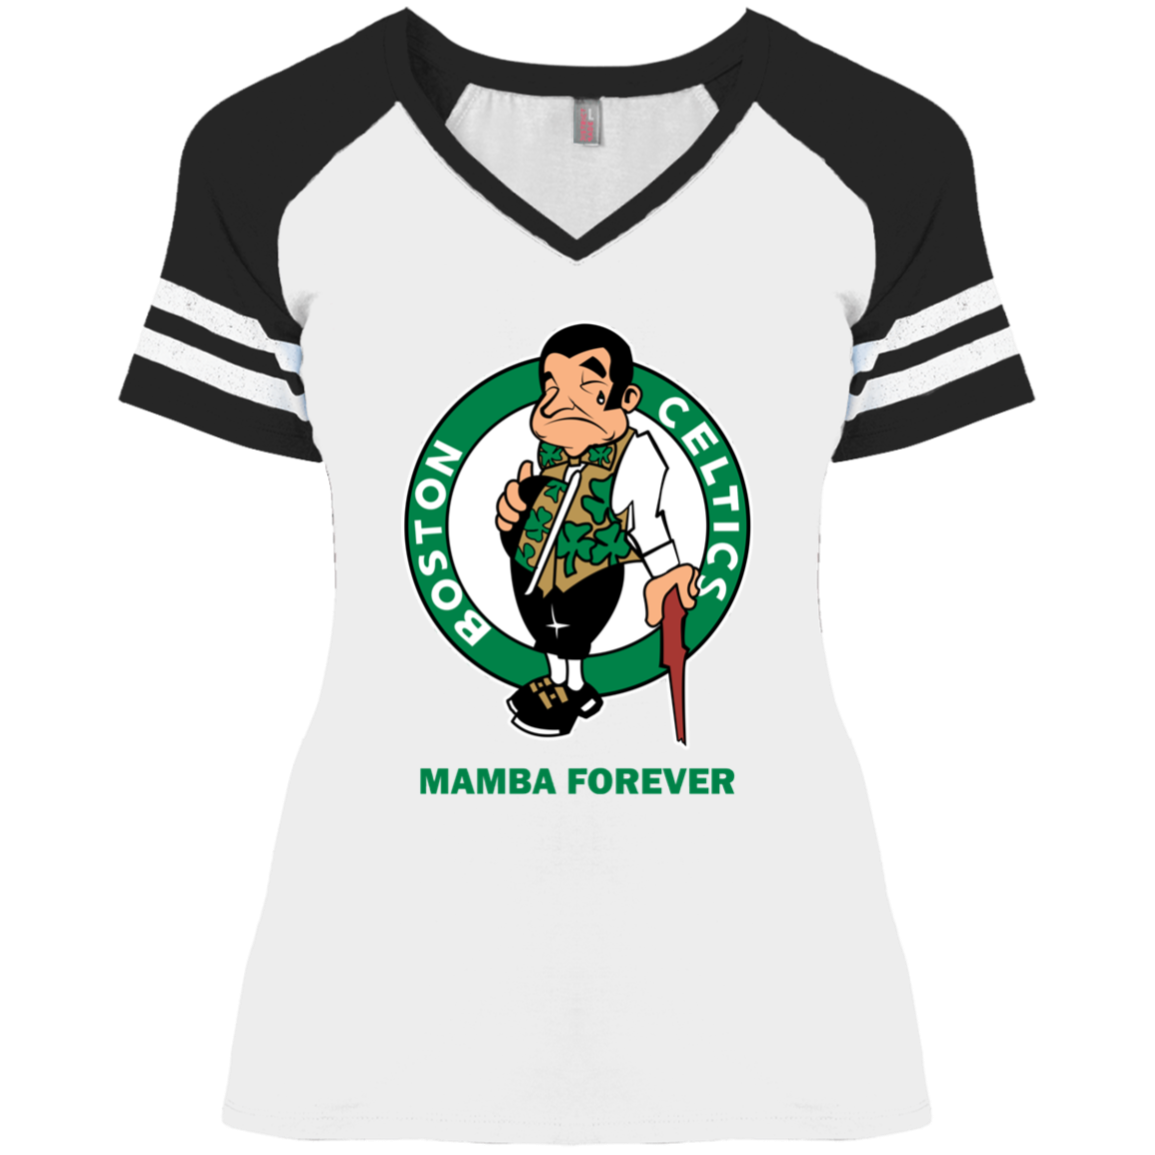 ArtichokeUSA Custom Design. RIP Kobe. Mamba Forever. Celtics / Lakers Fan Art Tribute. Ladies' Game V-Neck T-Shirt